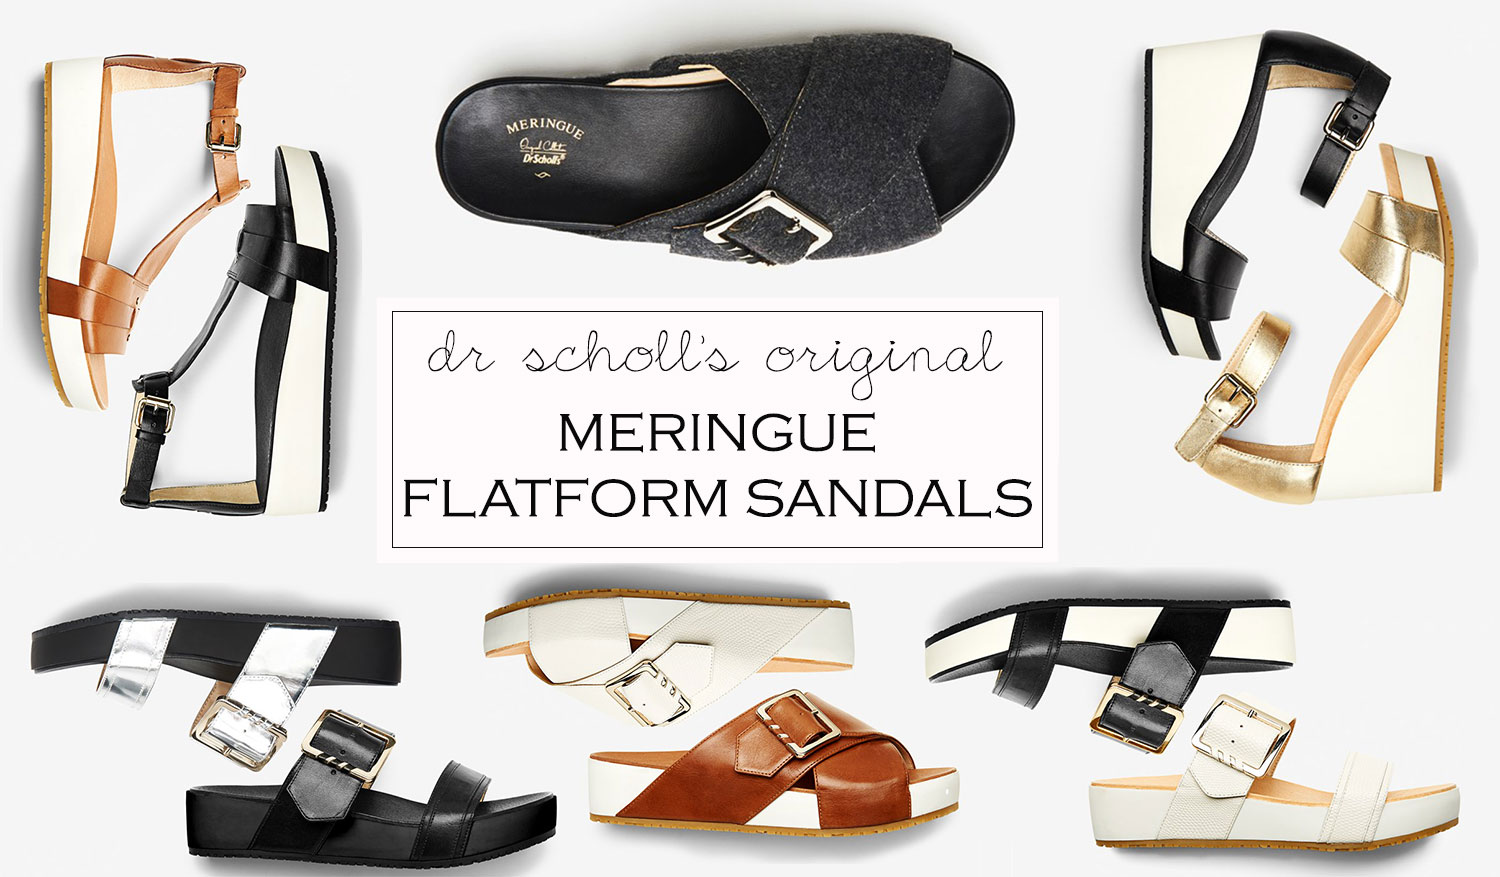 comfy fashionable flatform sandals dr scholls original meringue